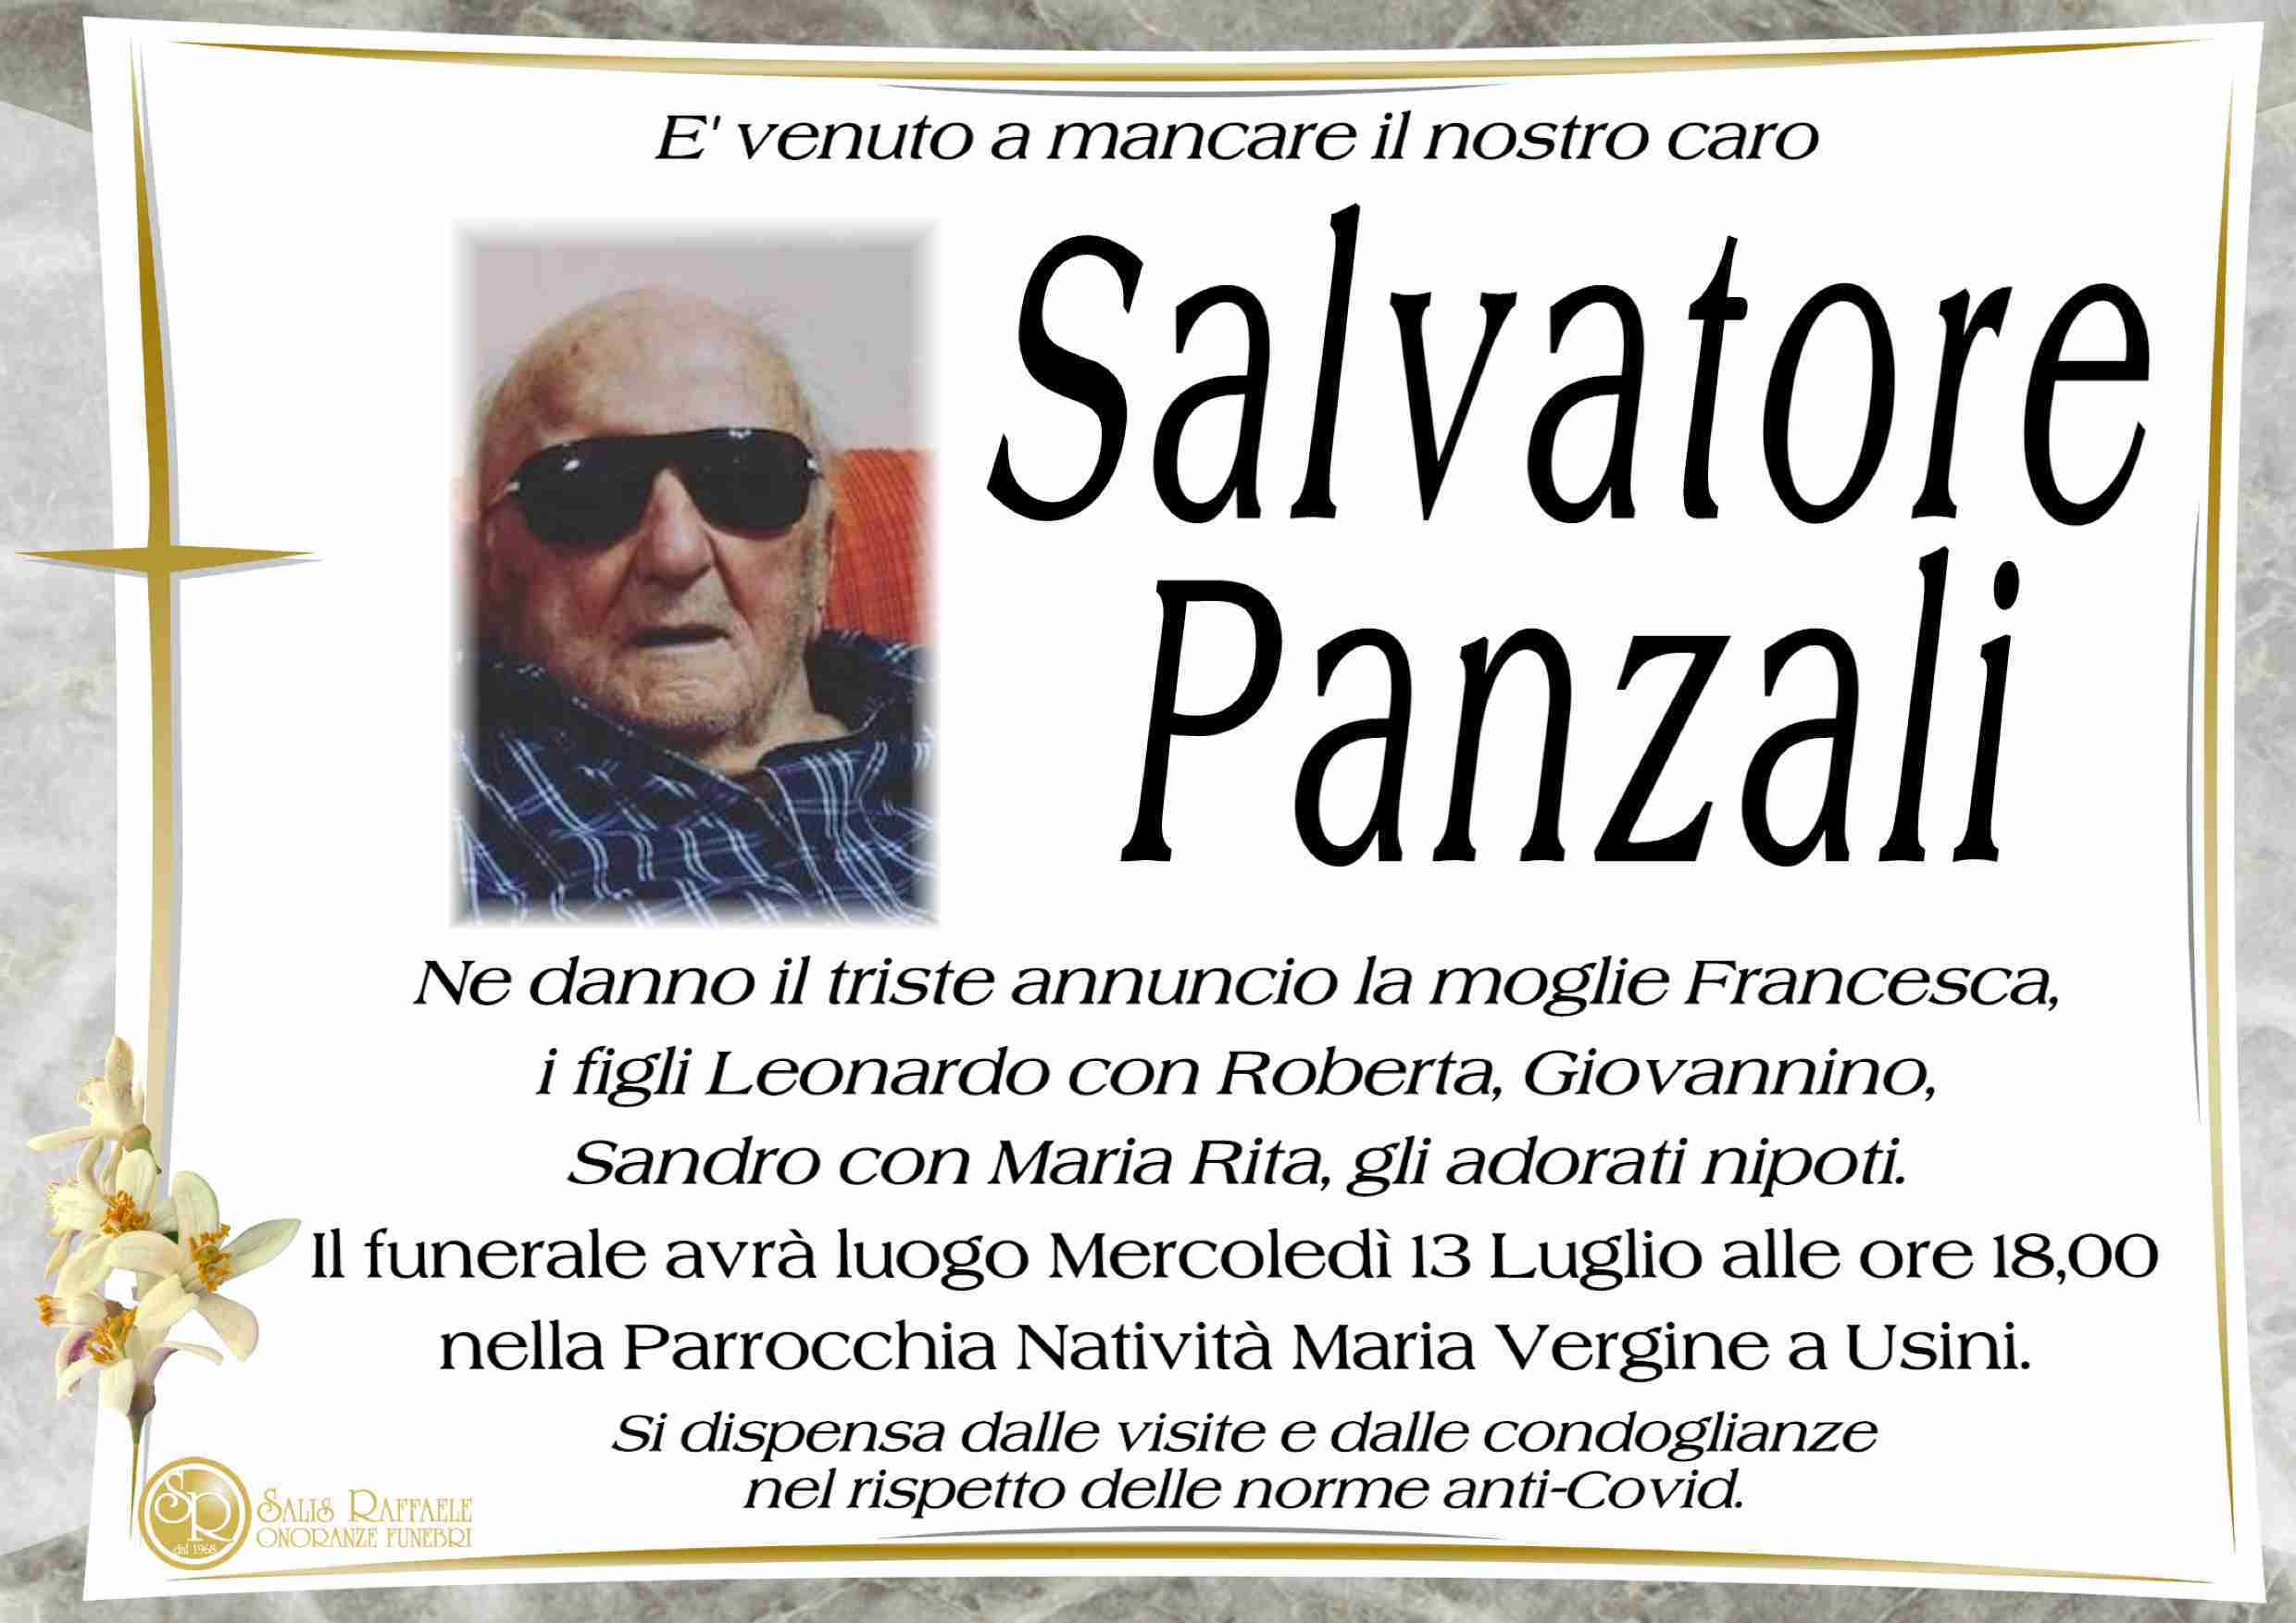 Salvatore Panzali